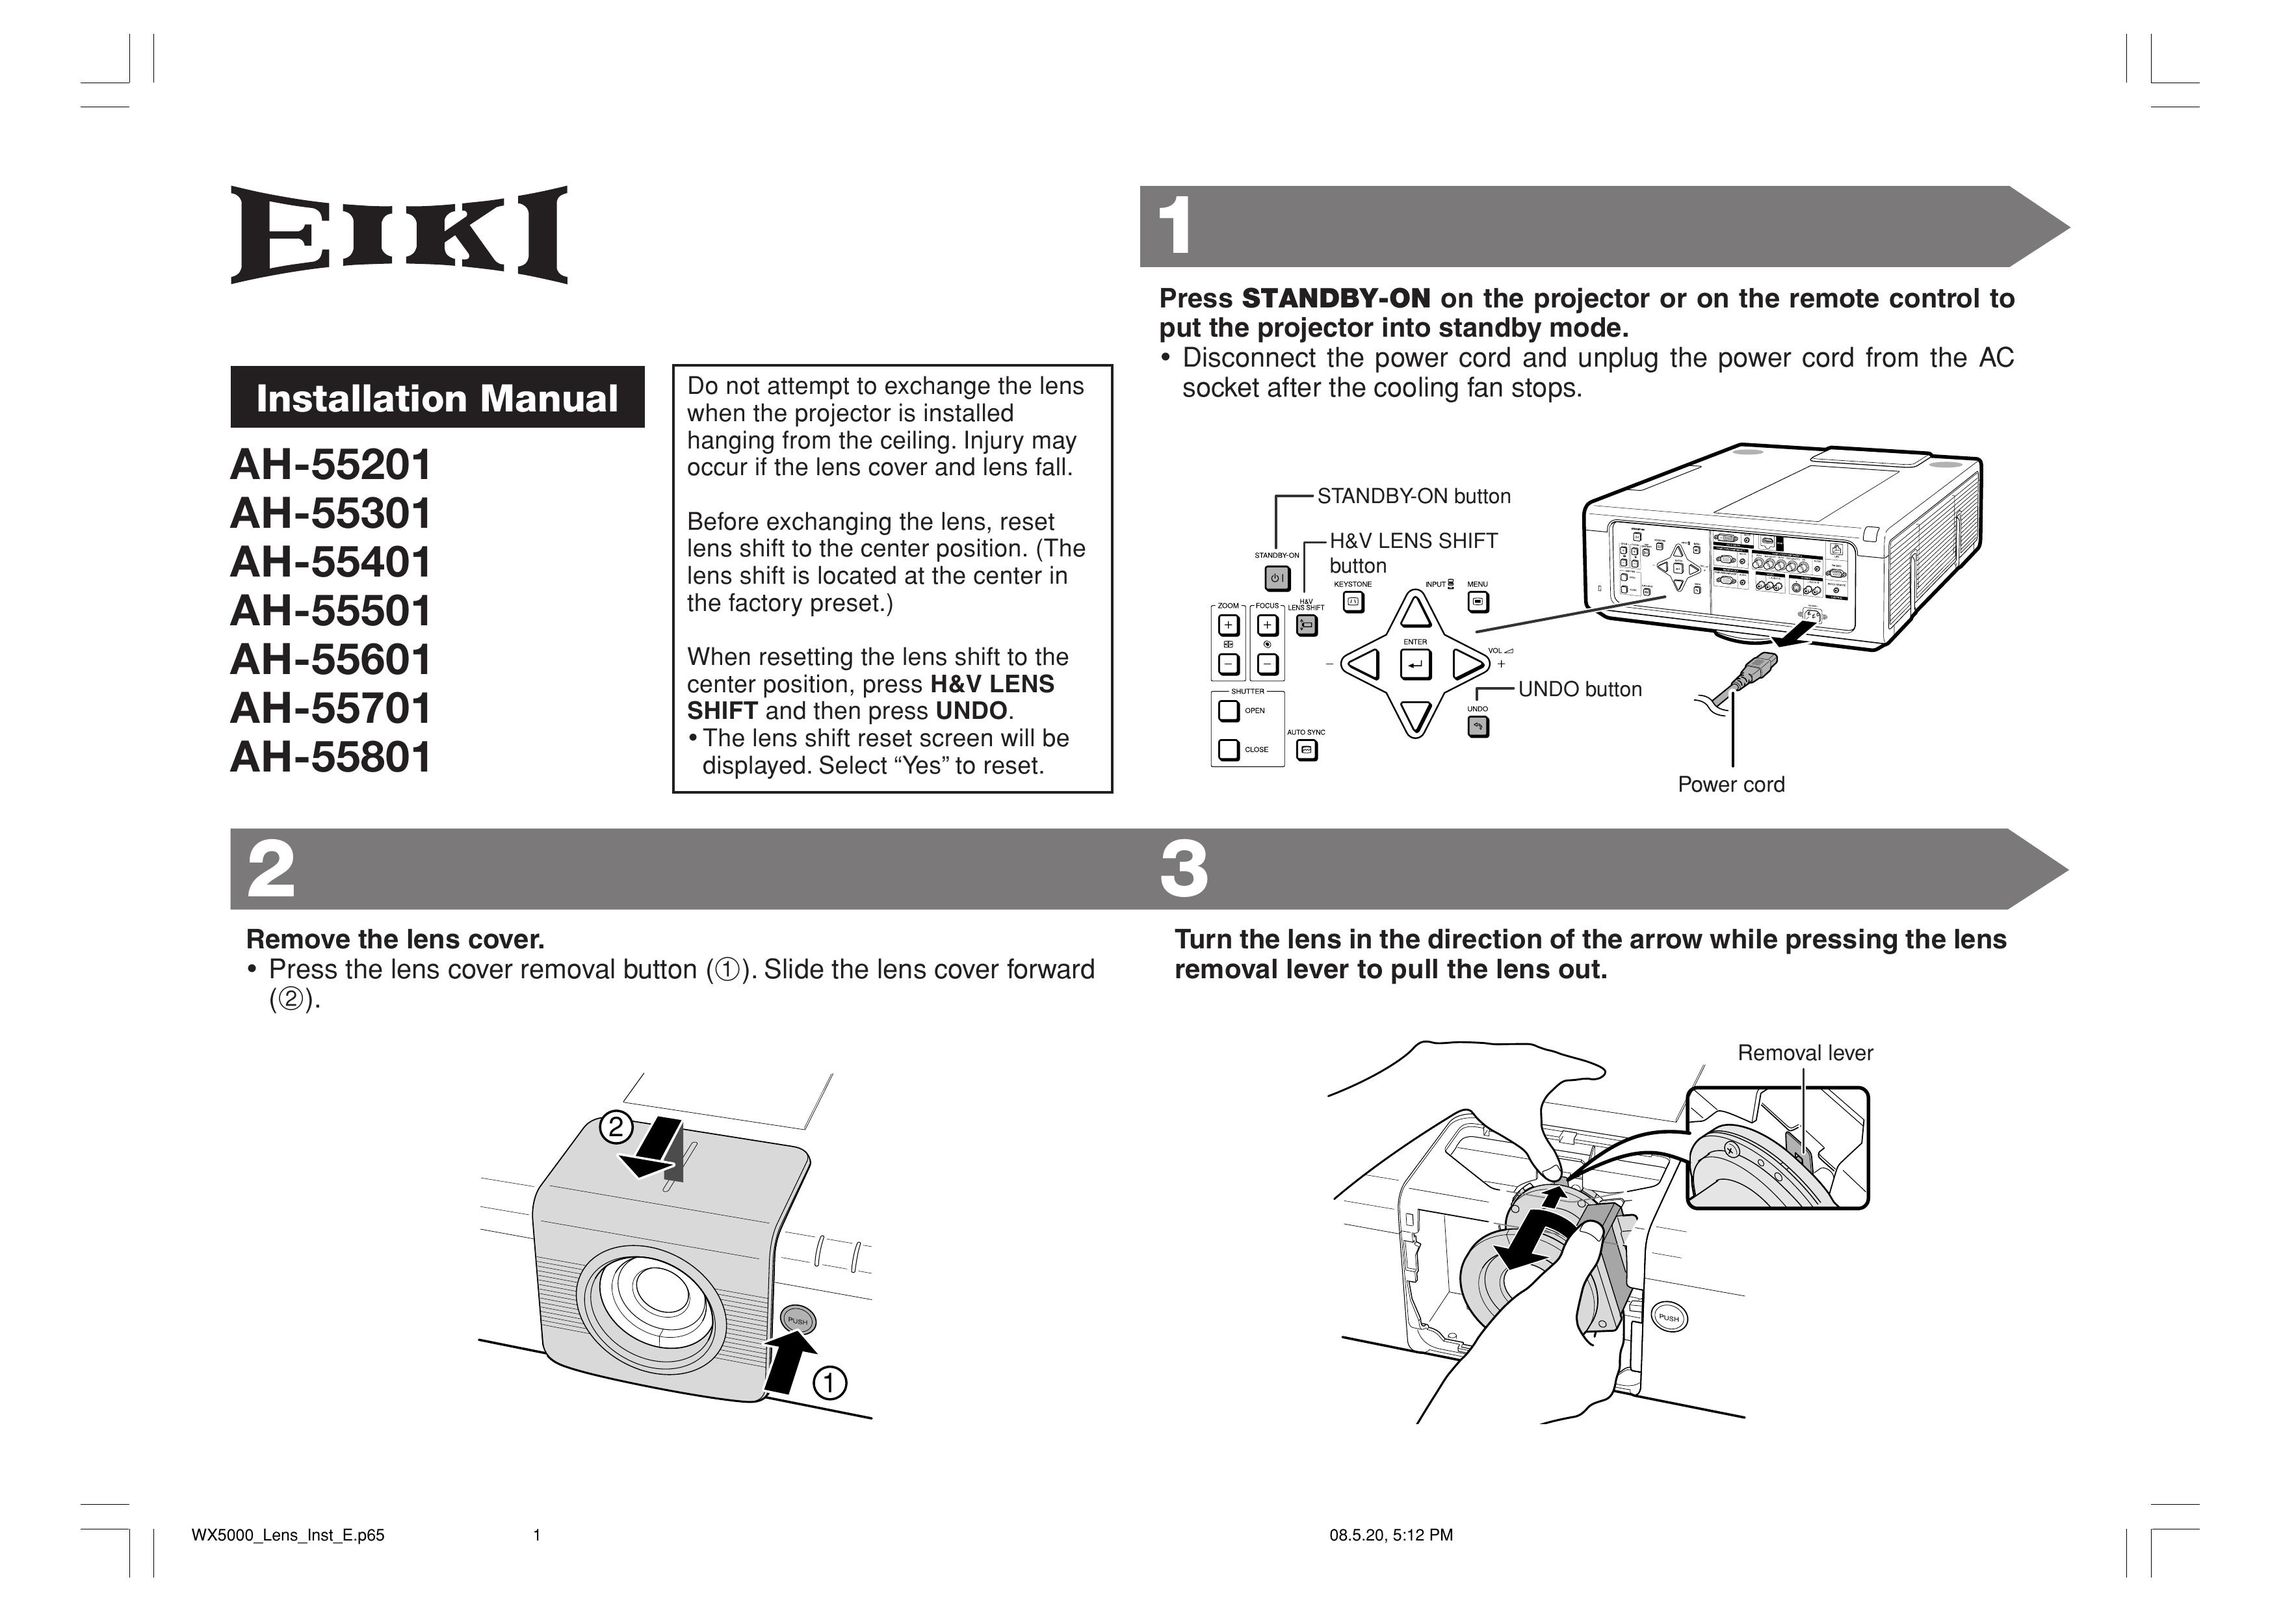 Eiki AH-55201 Projector User Manual